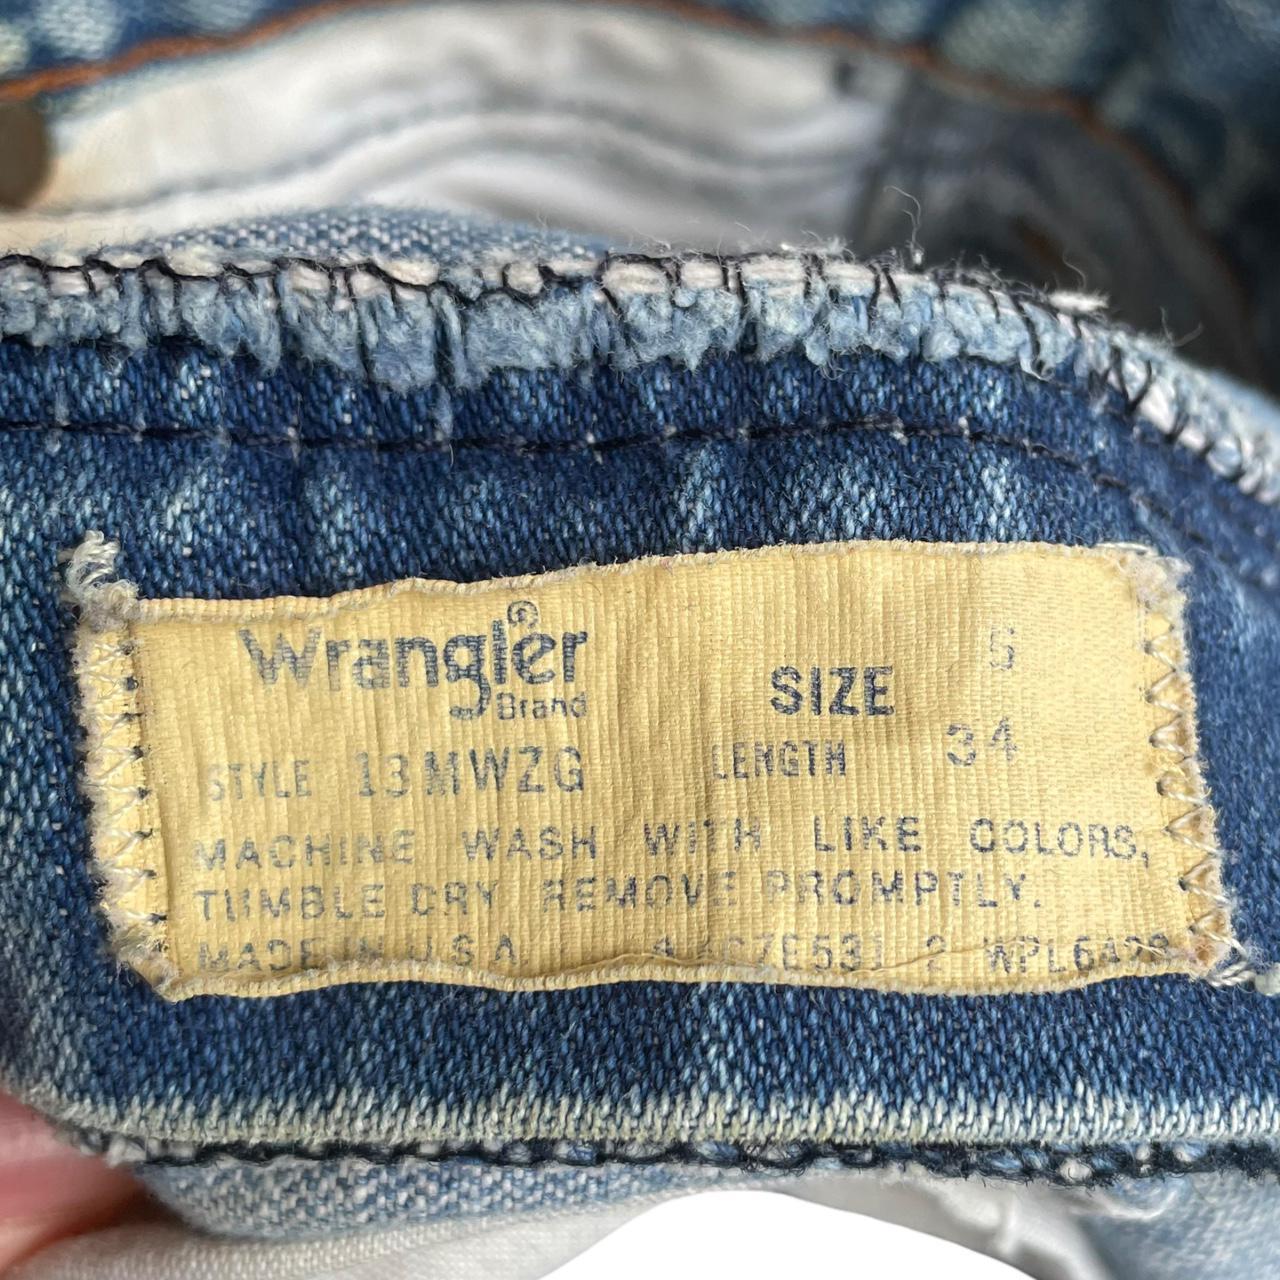 Product Image 3 - Vintage 70s Wrangler Denim Shorts

Classic